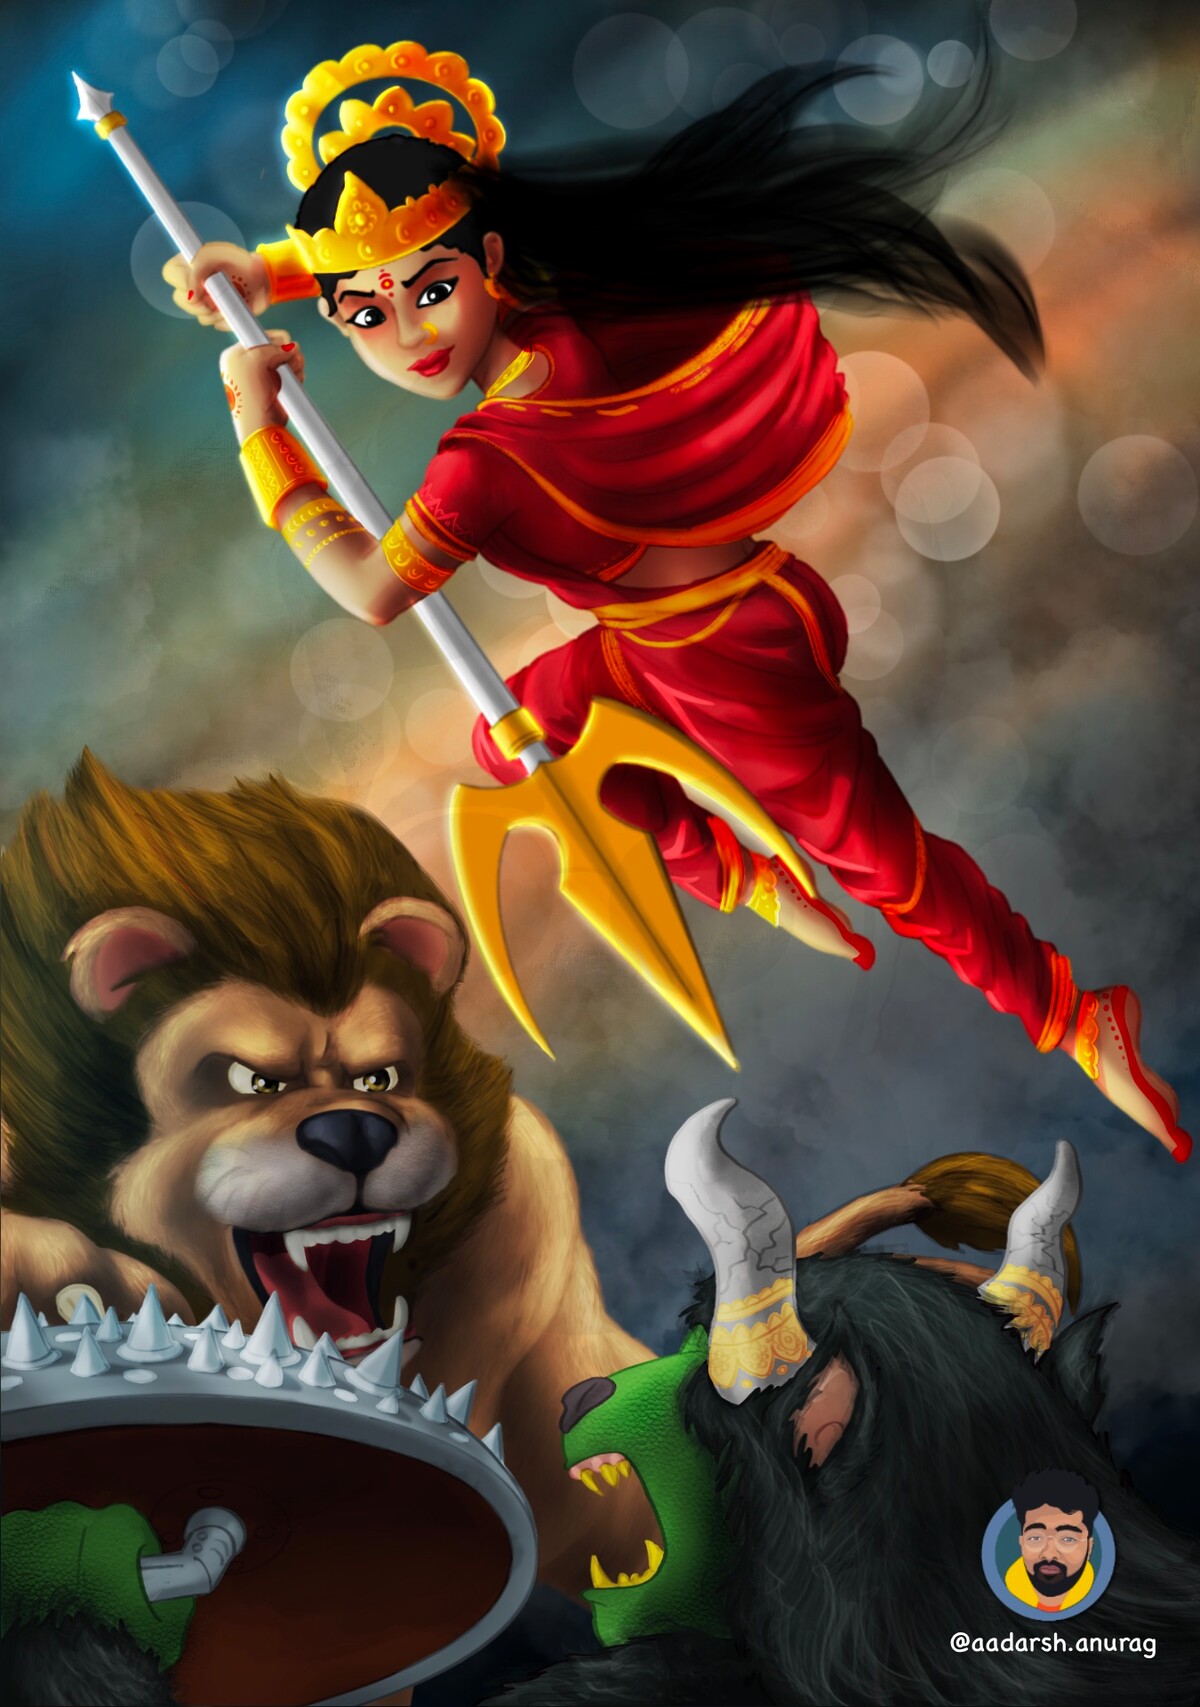 Durga Maa concept art | Illustration portfolio by Aadarsh Anurag | RemoteHub